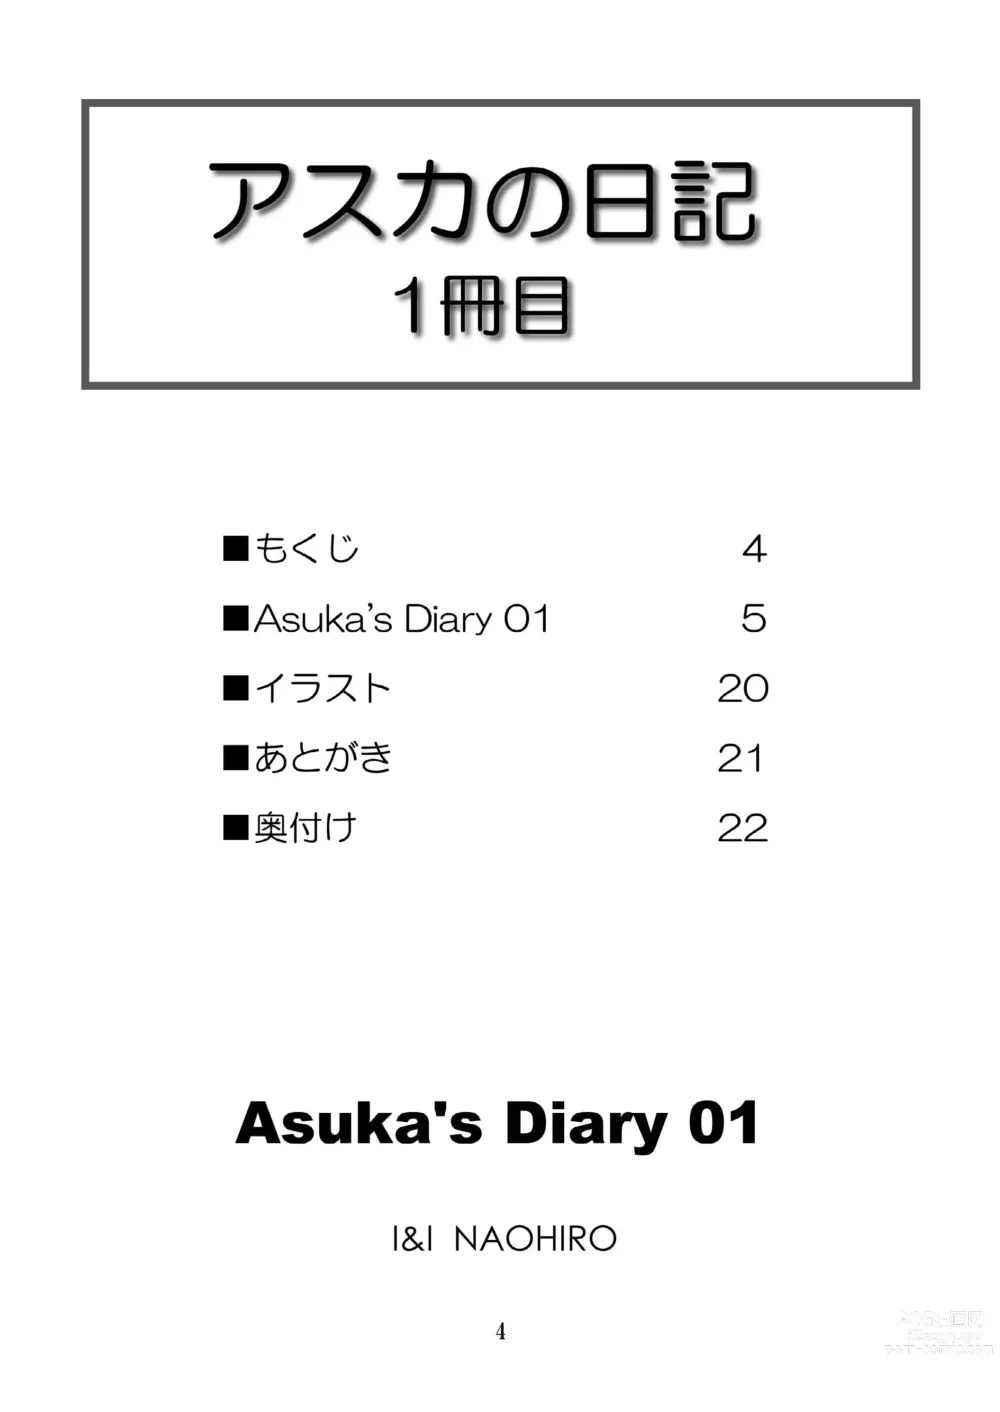 Page 4 of doujinshi Asukas Diary 01